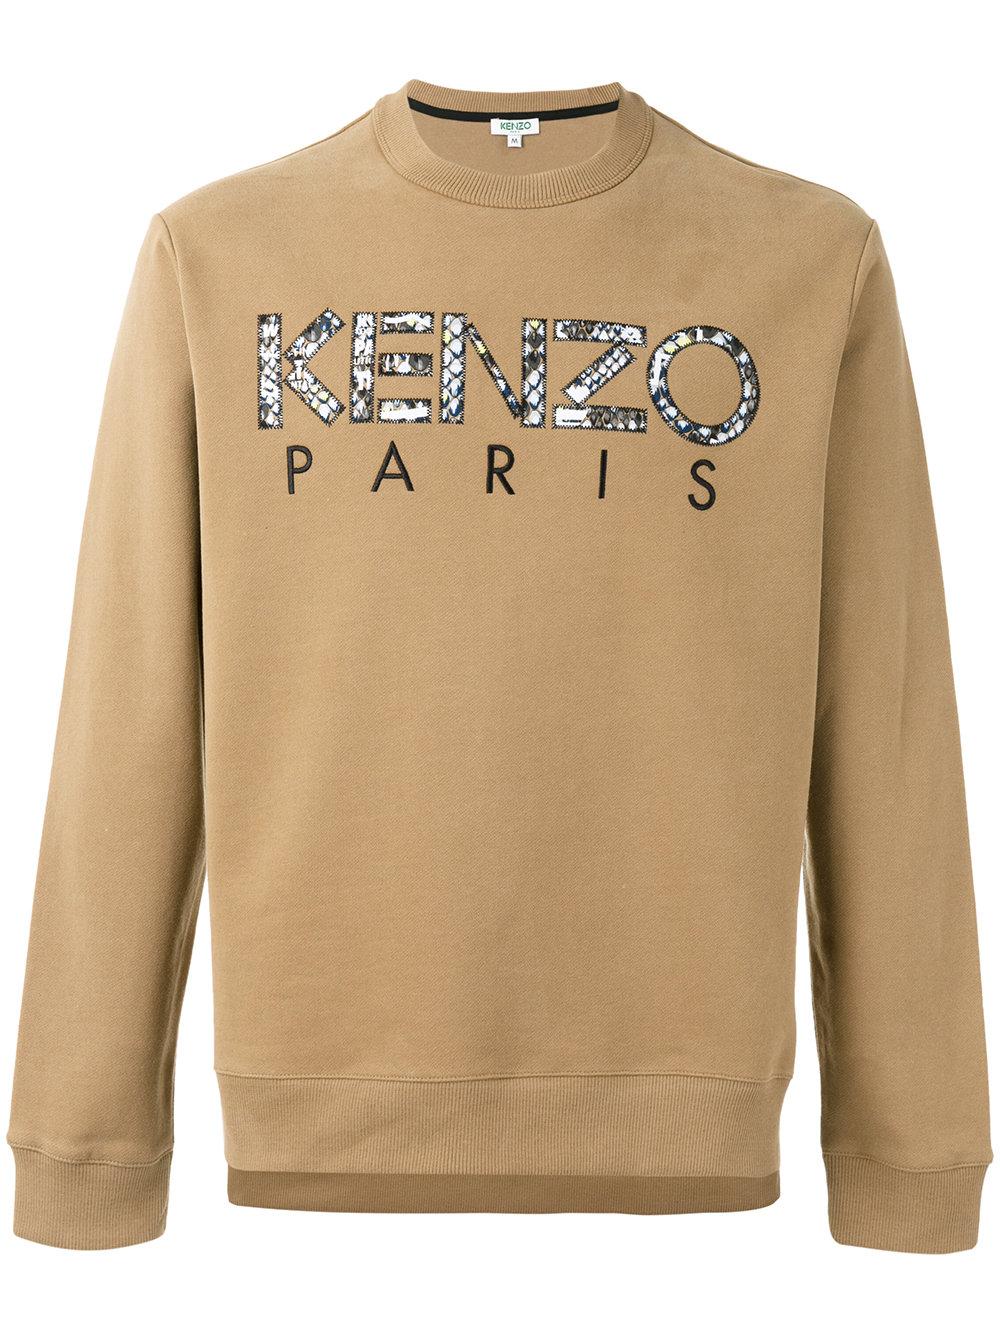 brown kenzo shirt